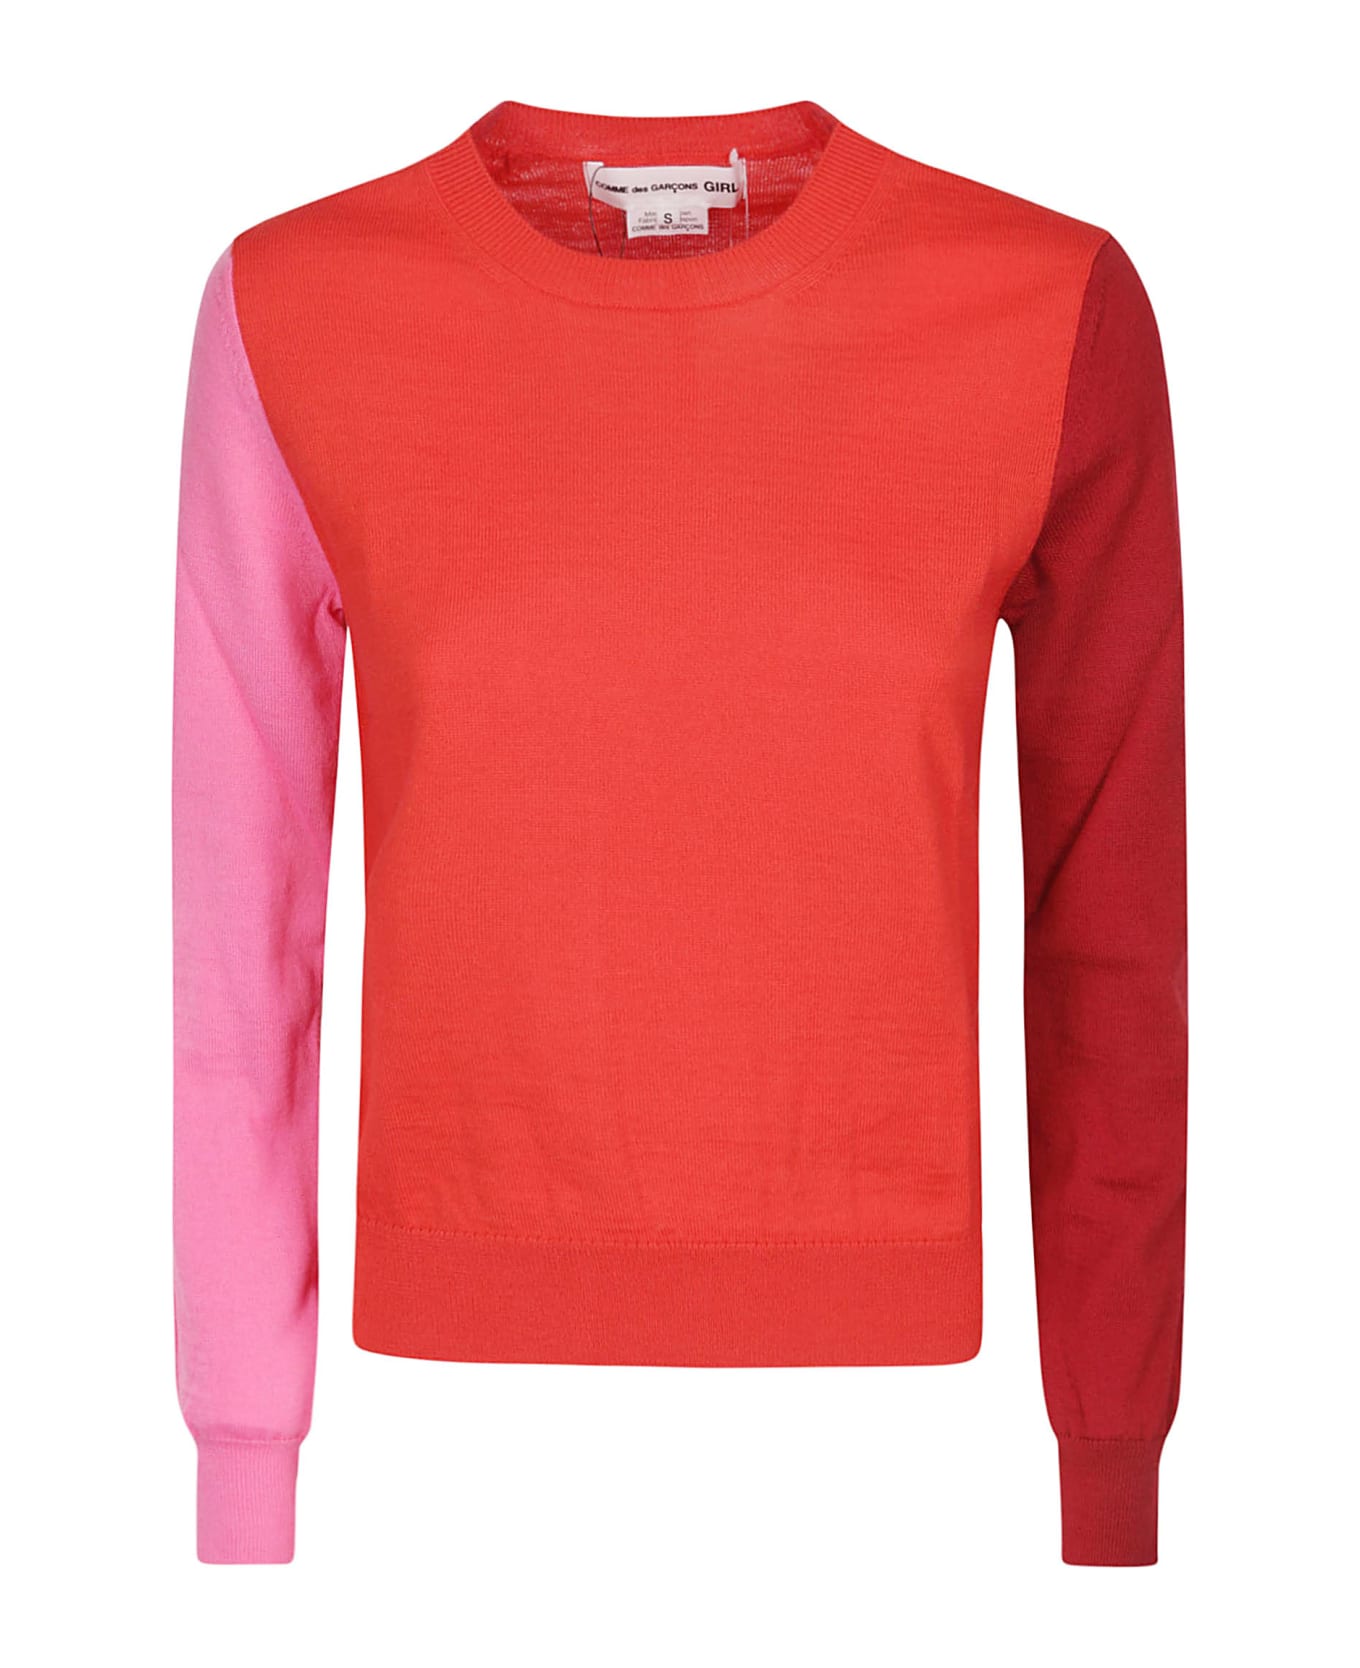 Comme Des Garçons Girl Ladies' Sweater - RED MIX